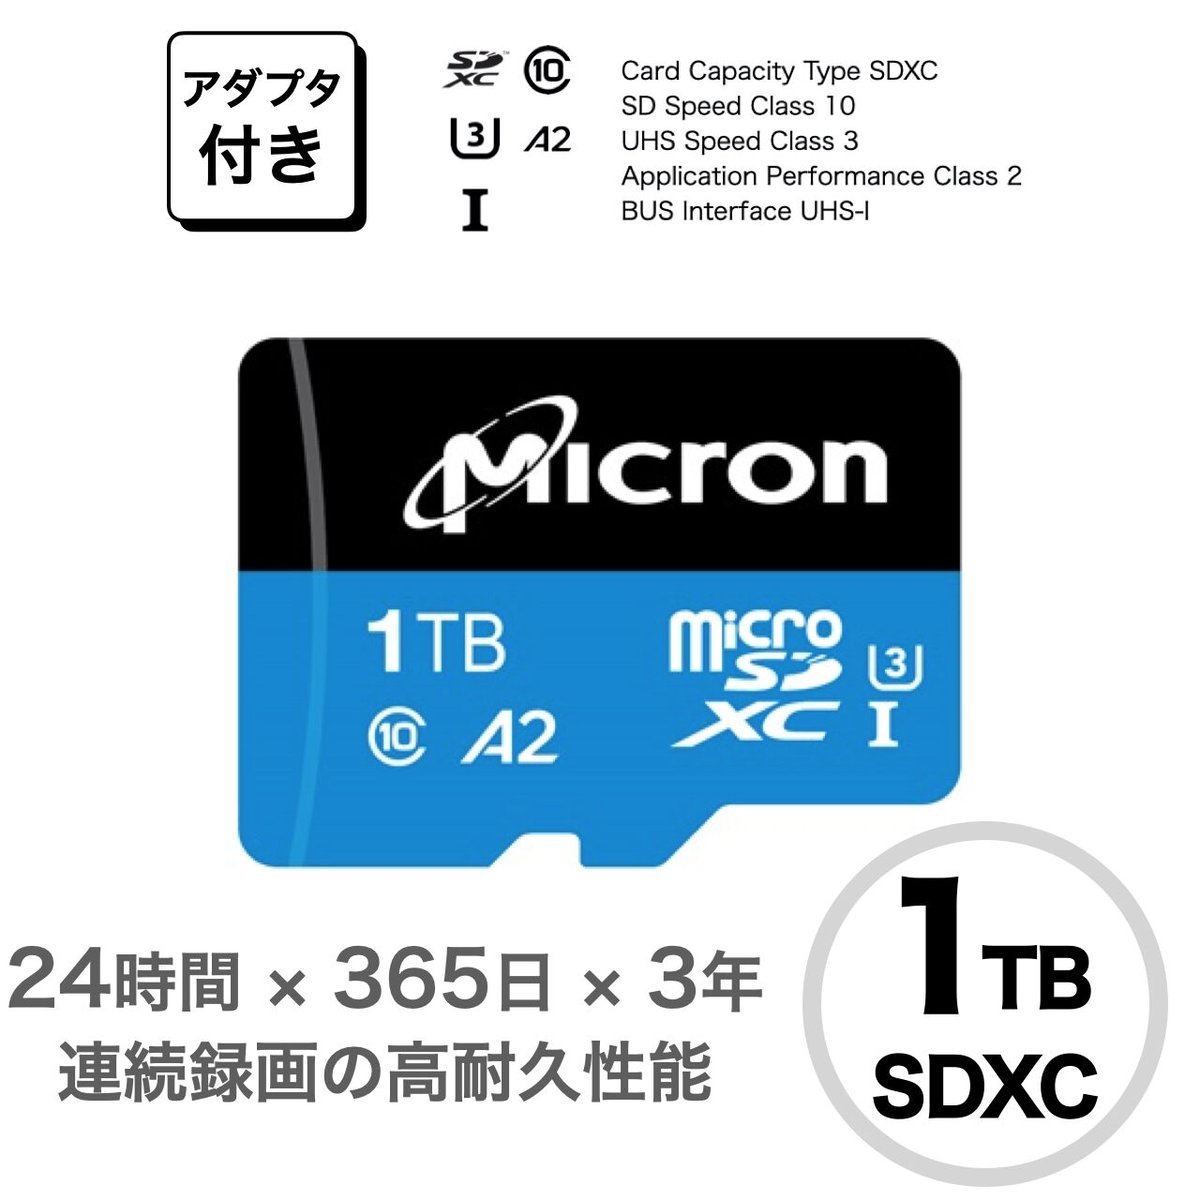 1TB microSD | NBO Electronics